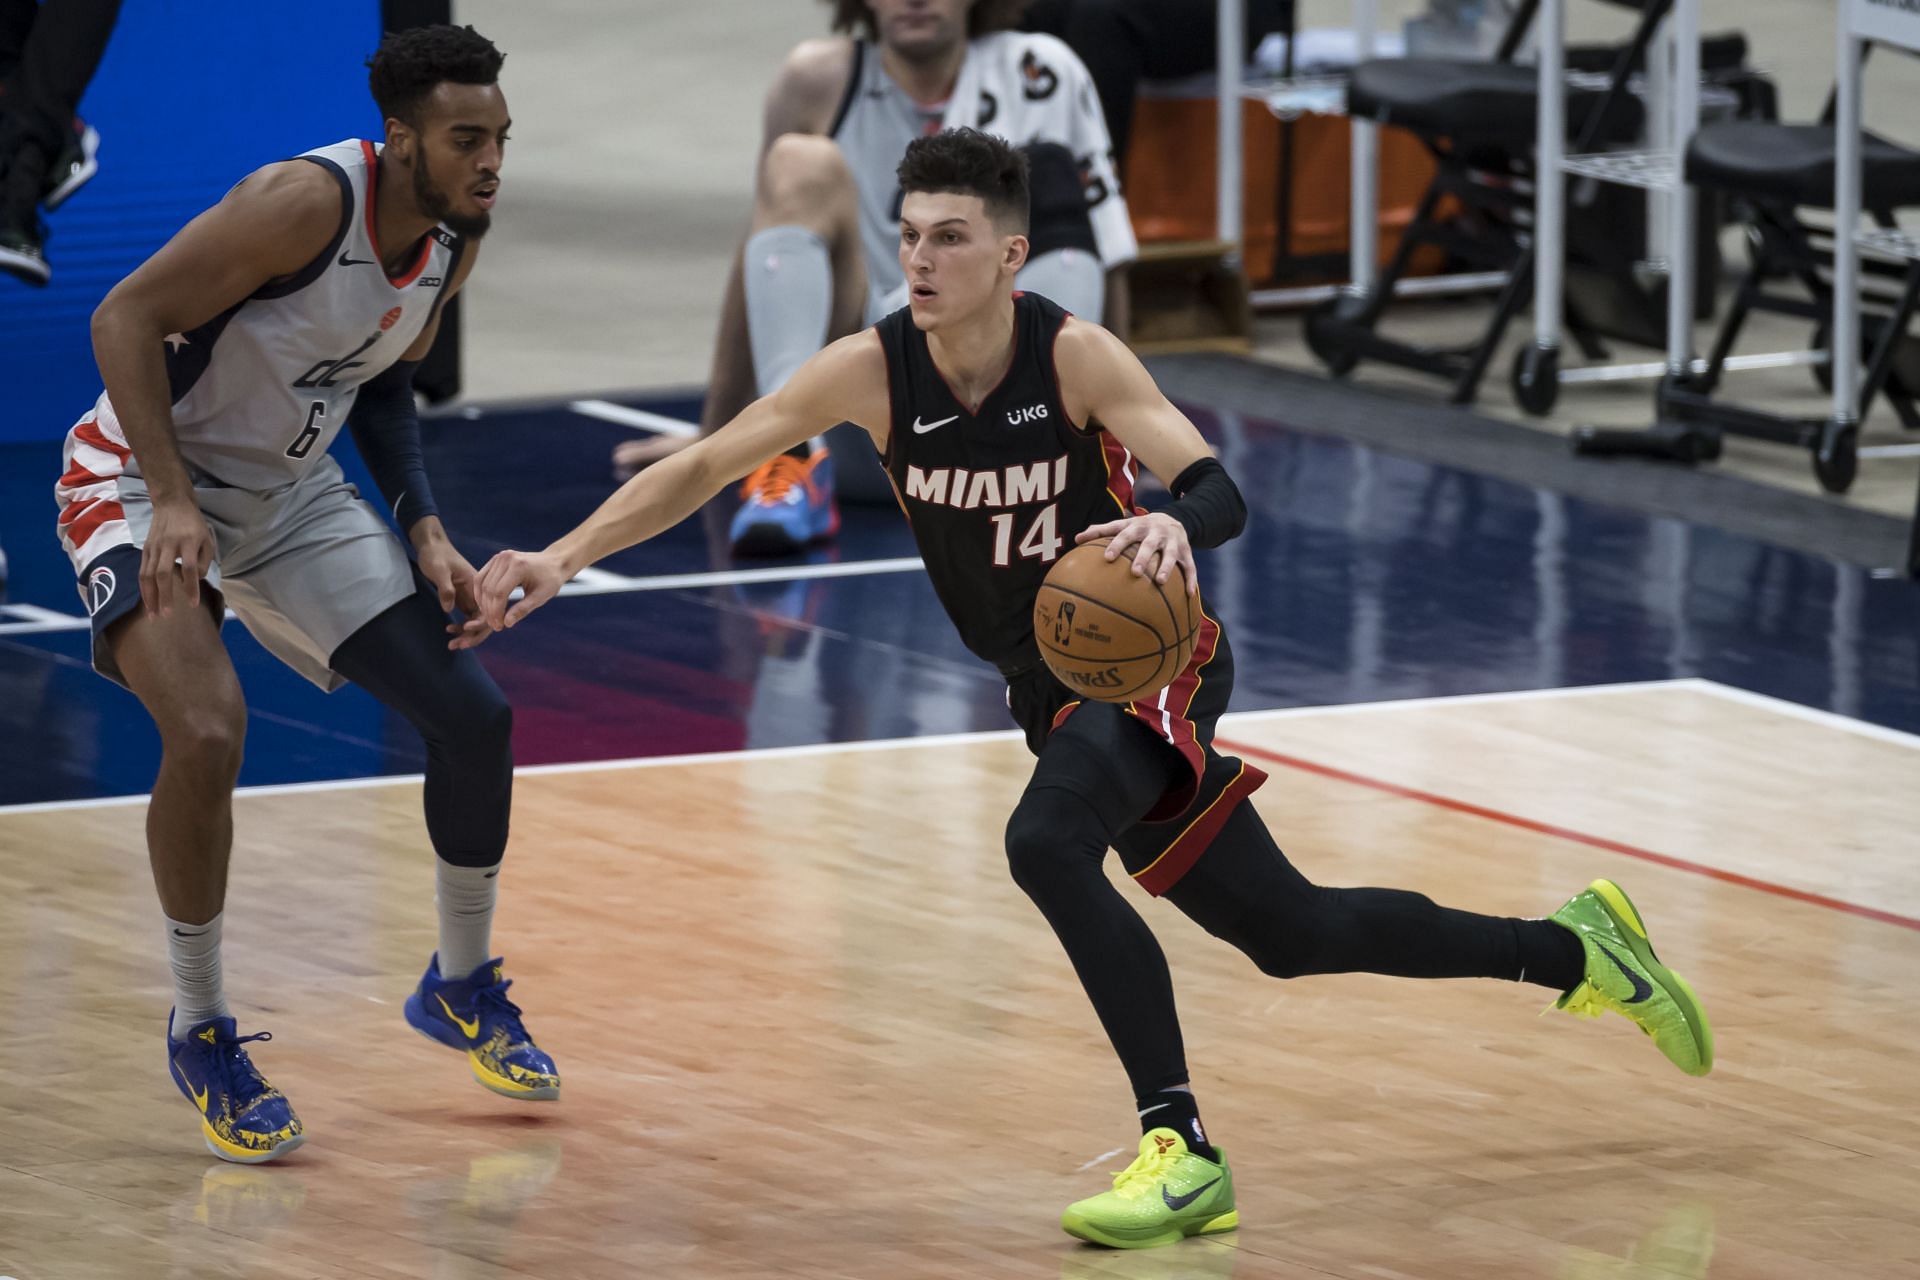 The Washington Wizards will host the Miami Heat on February 7th.